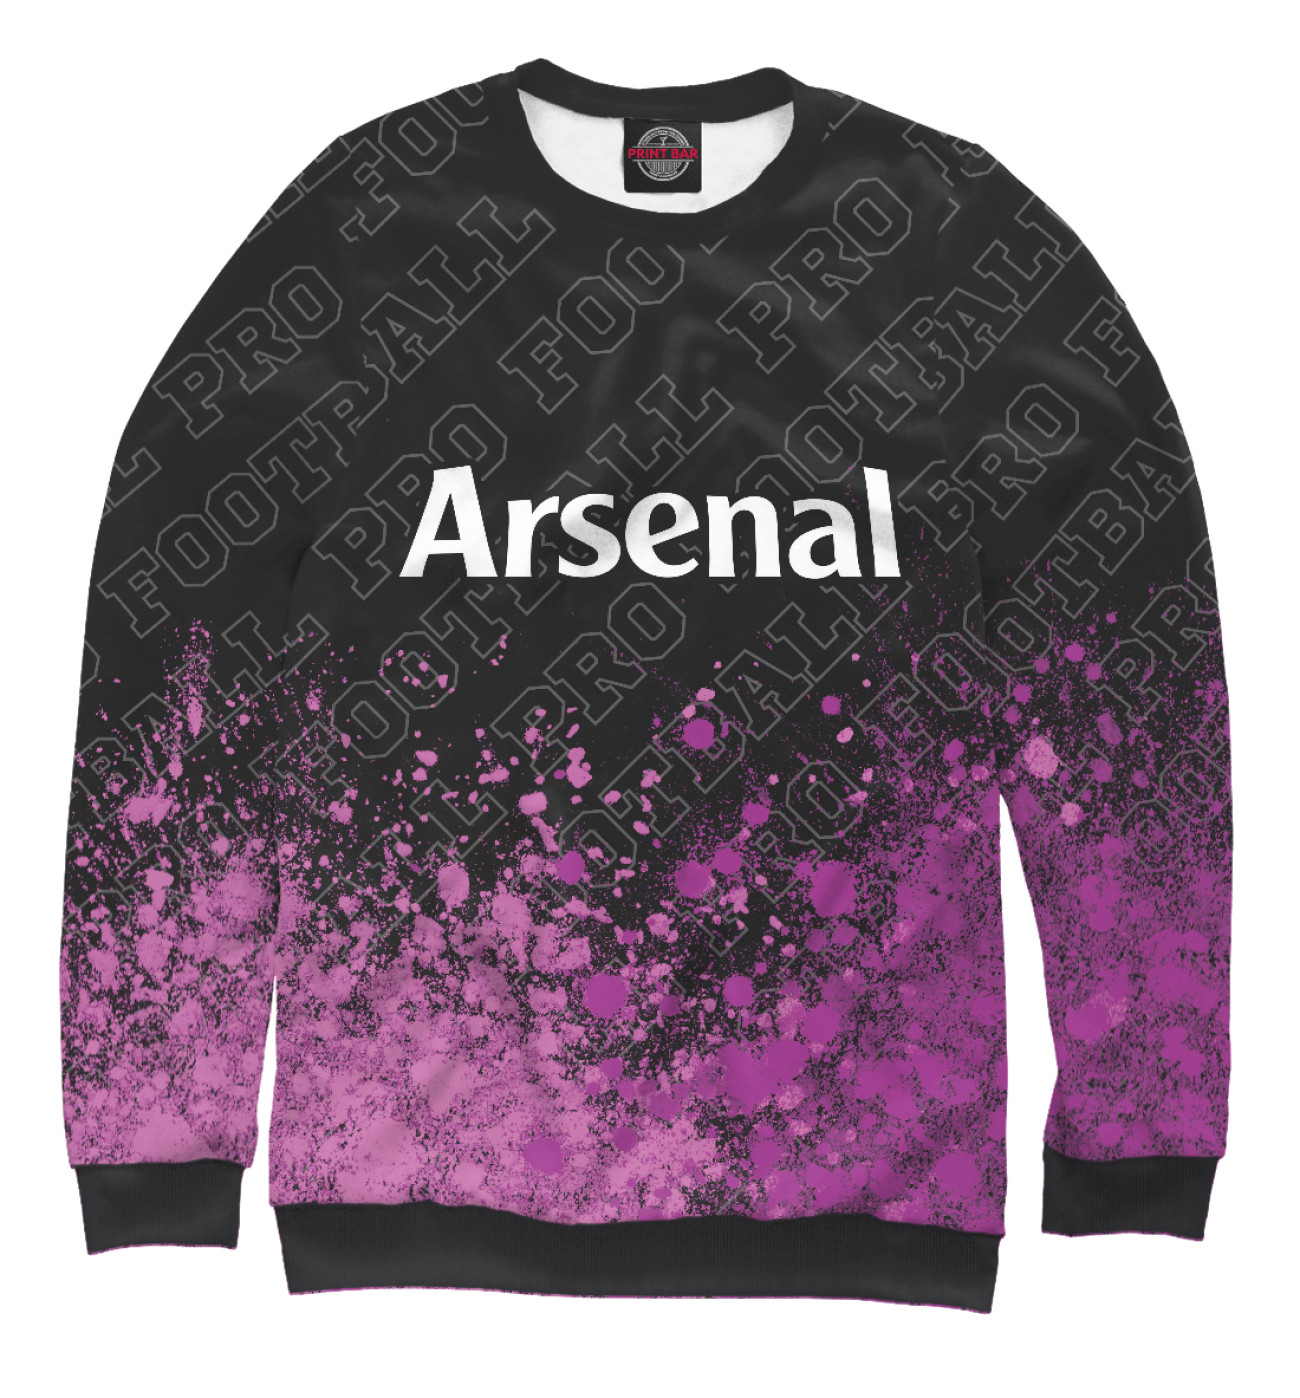 Женский Свитшот Arsenal Pro Football (color splash), артикул: ARS-755668-swi-1